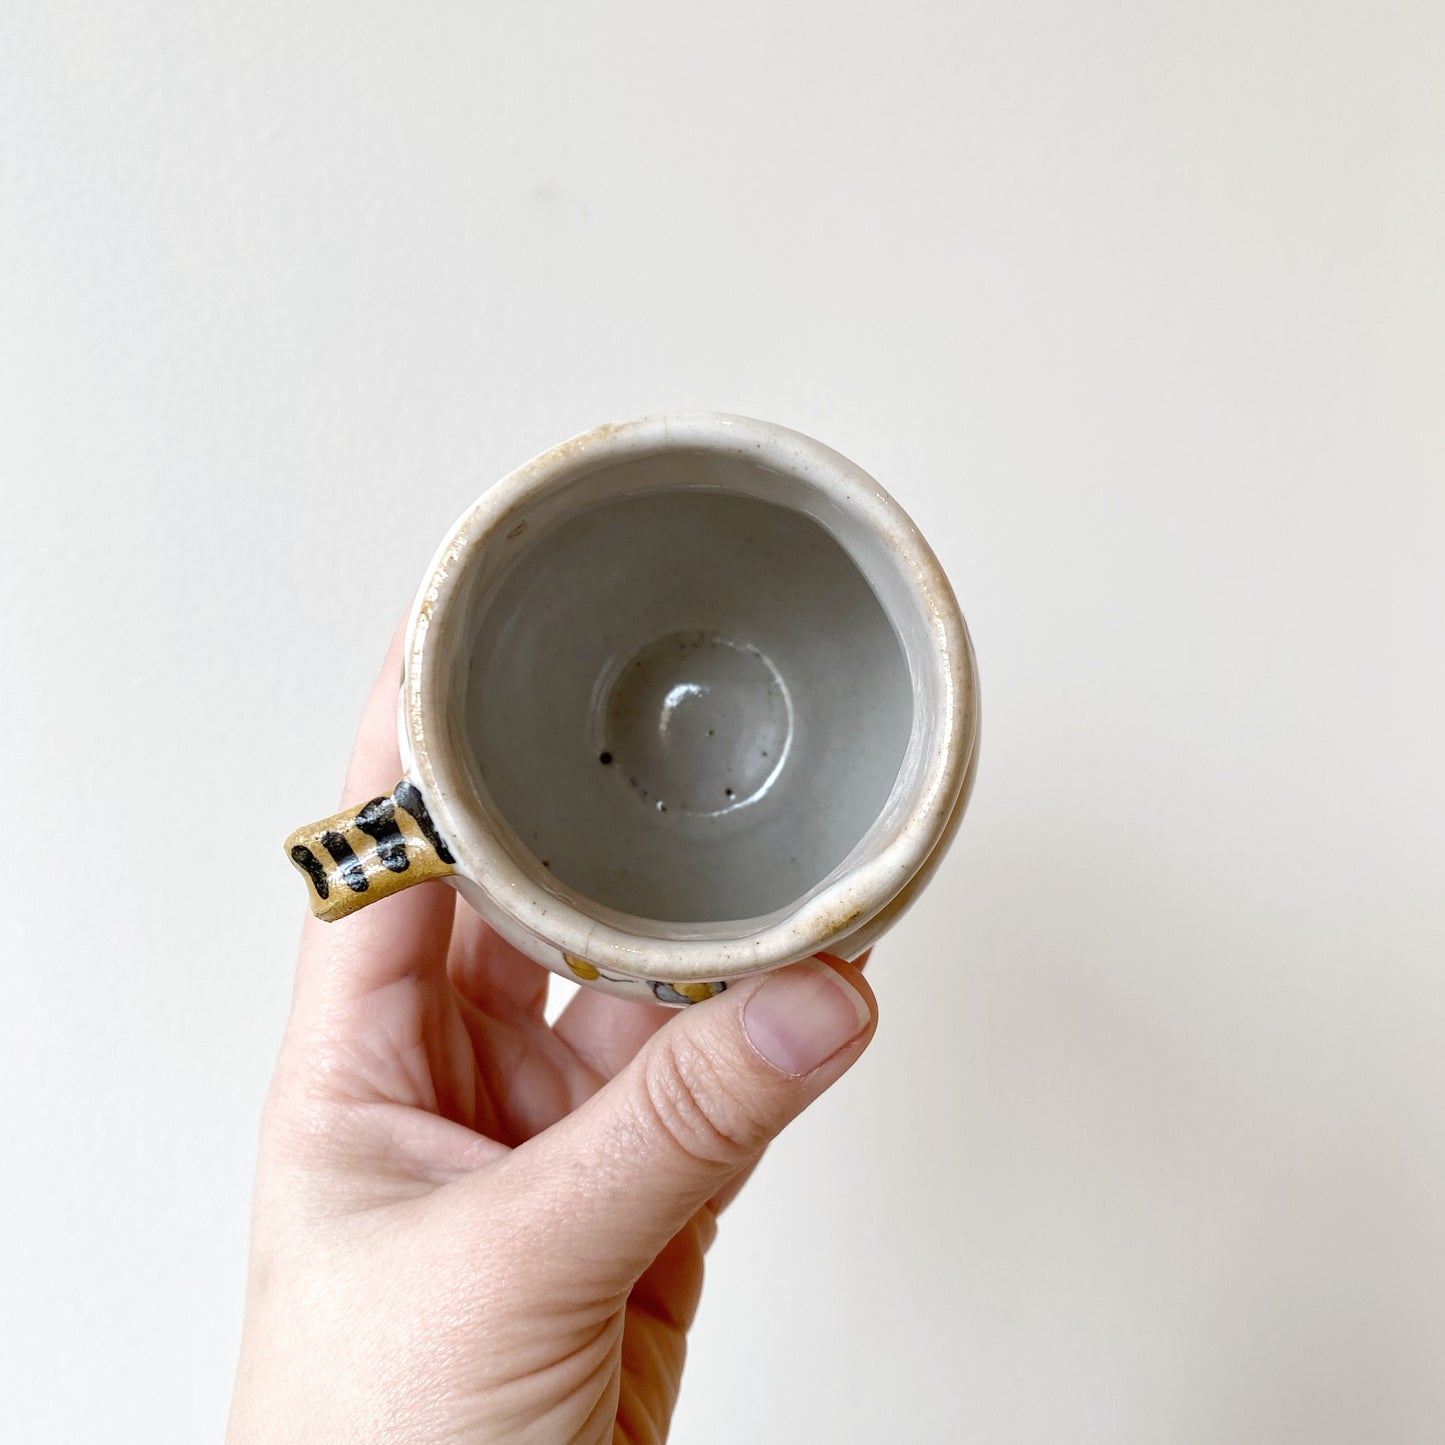 Vintage Hand-painted Floral Ceramic Cup